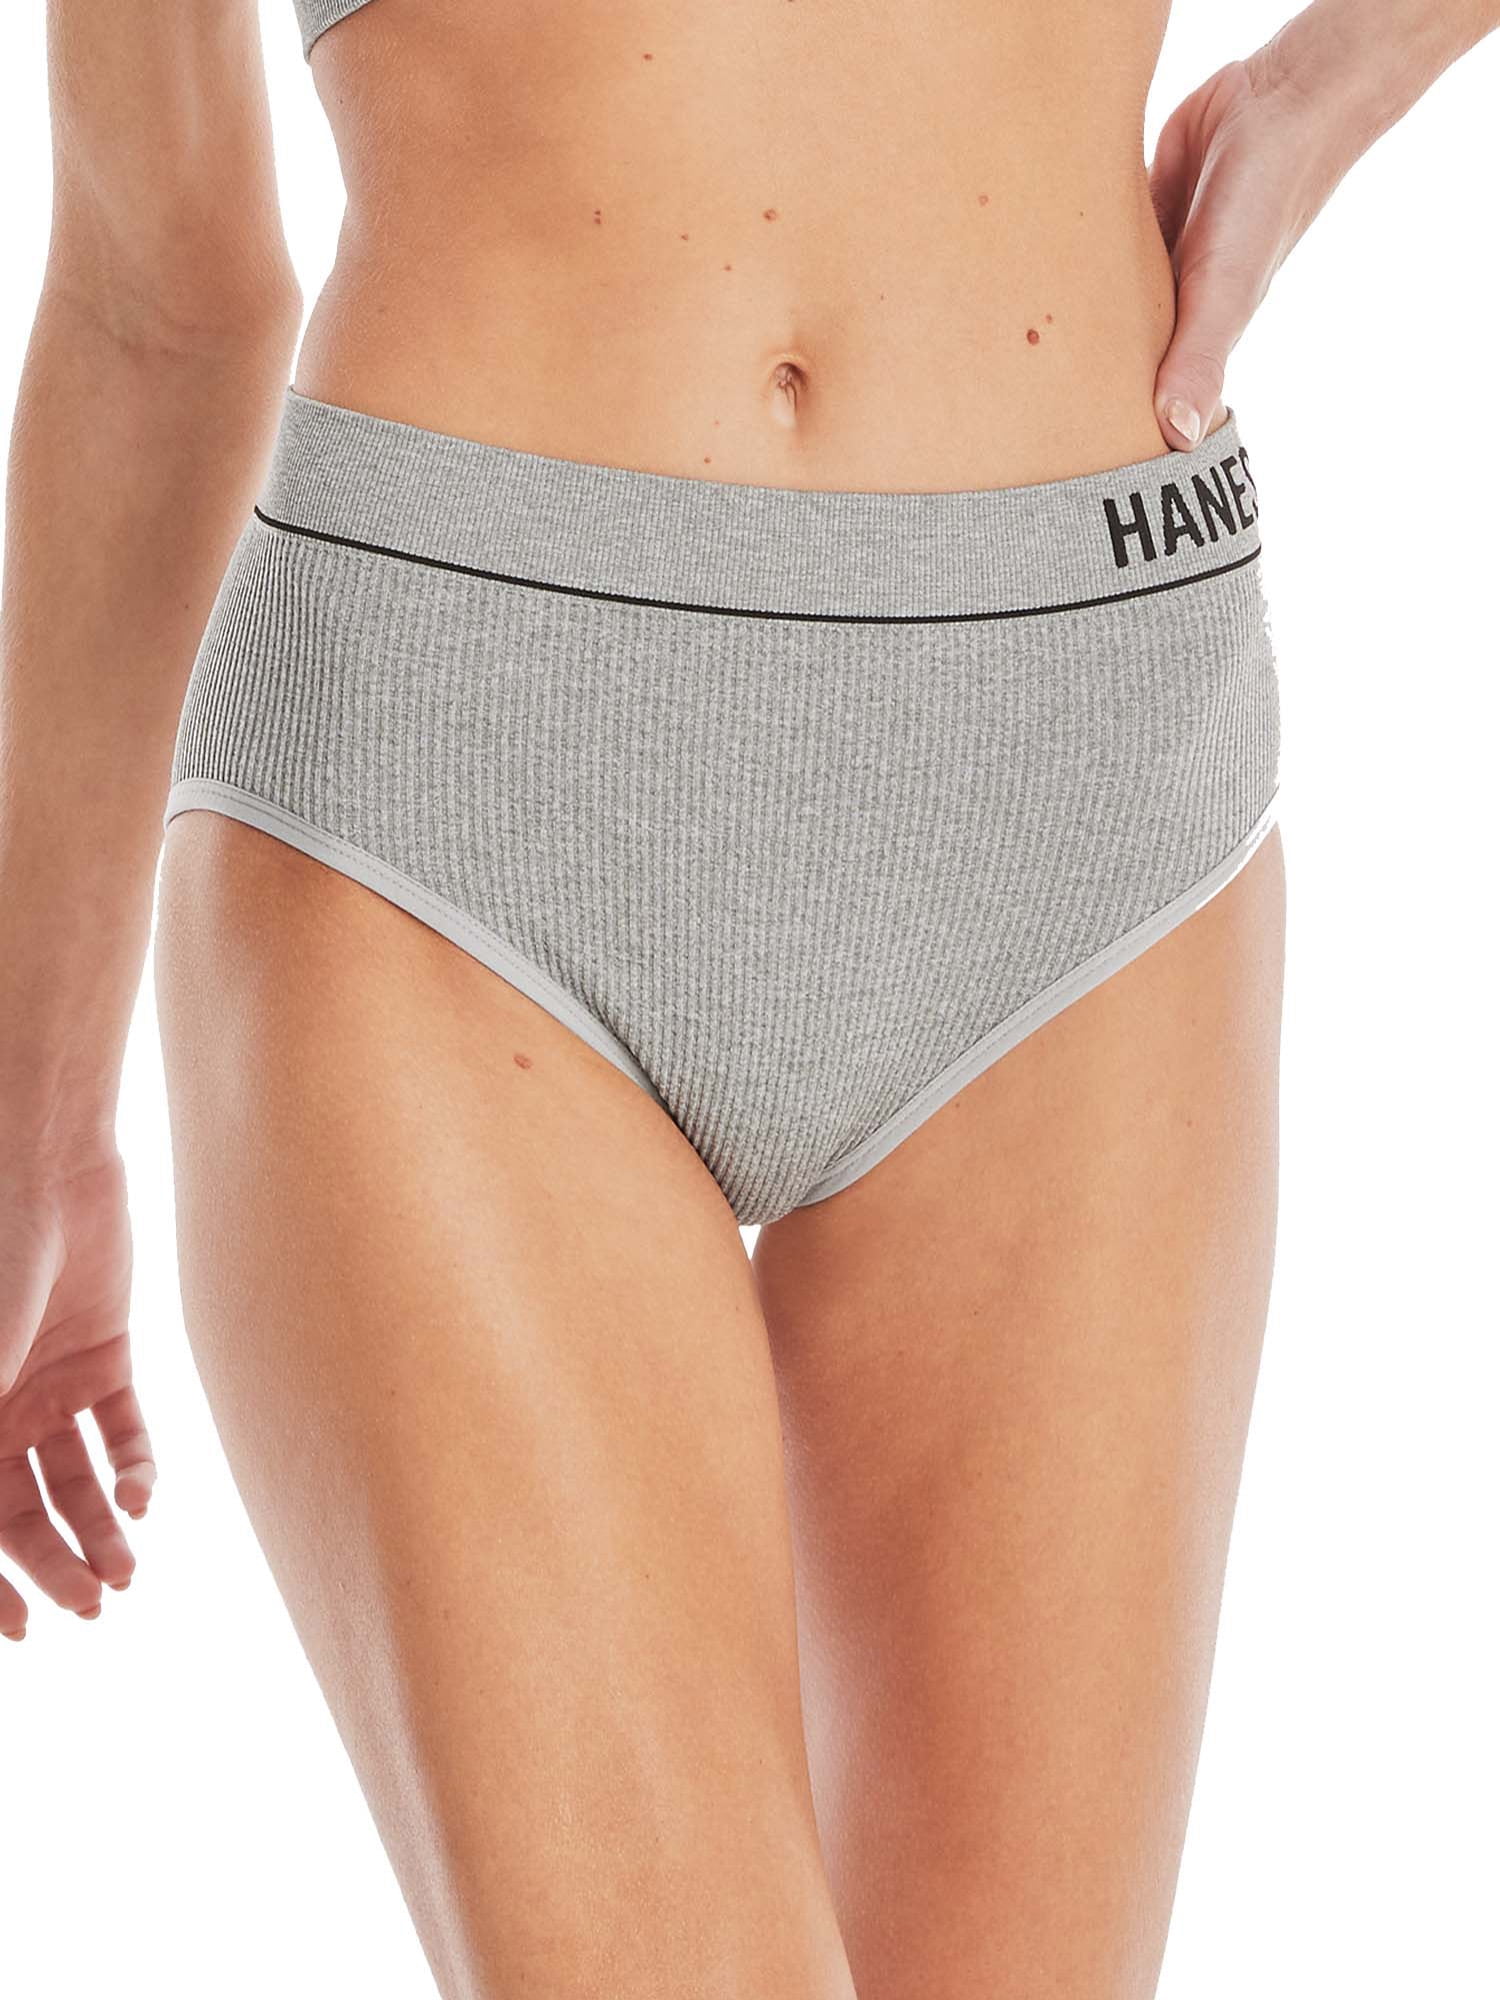 Hanes Originals Women's 3pk Ribbed Bikini Underwear - Gold/White/Pink XXL 3  ct